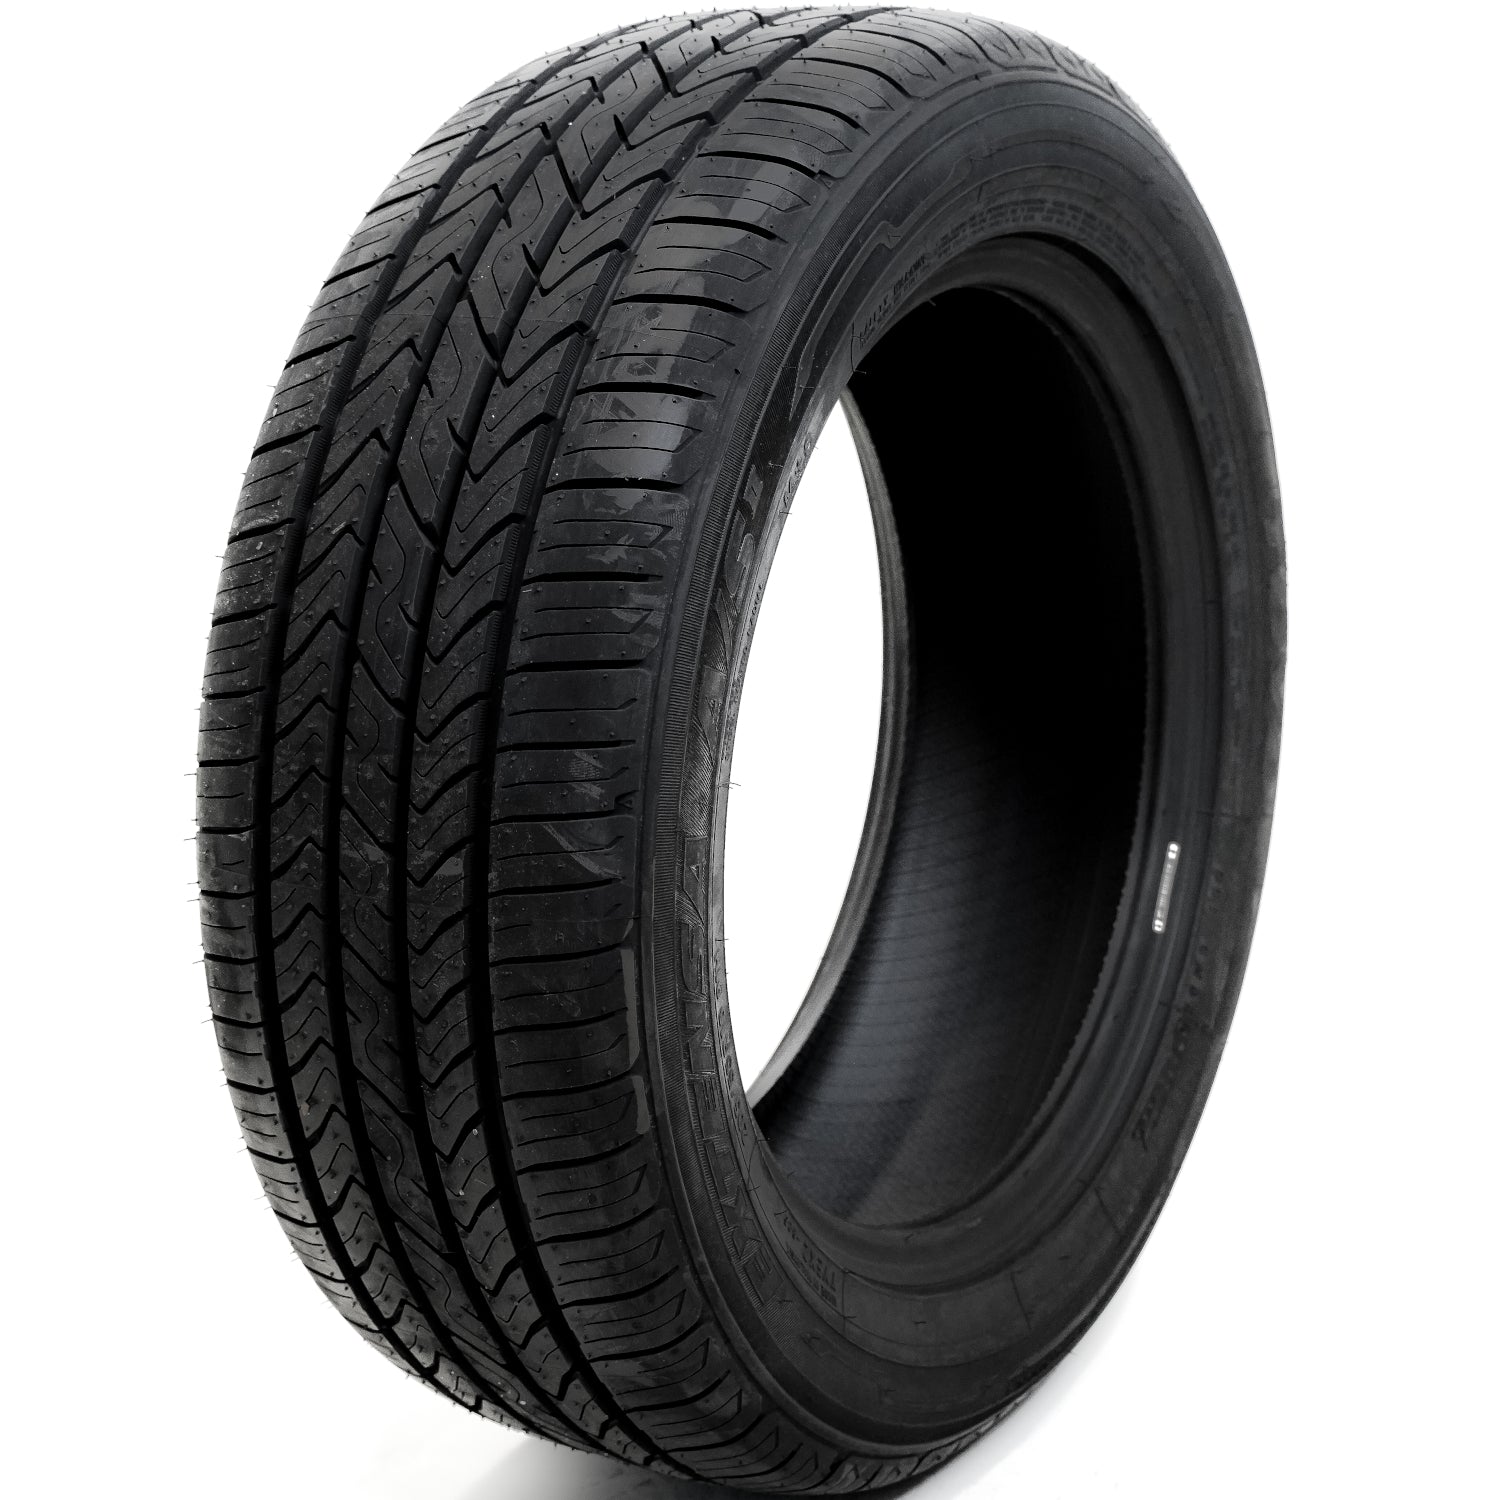 TOYO TIRES EXTENSA A/S II 225/60R18 (28.6X8.9R 18) Tires